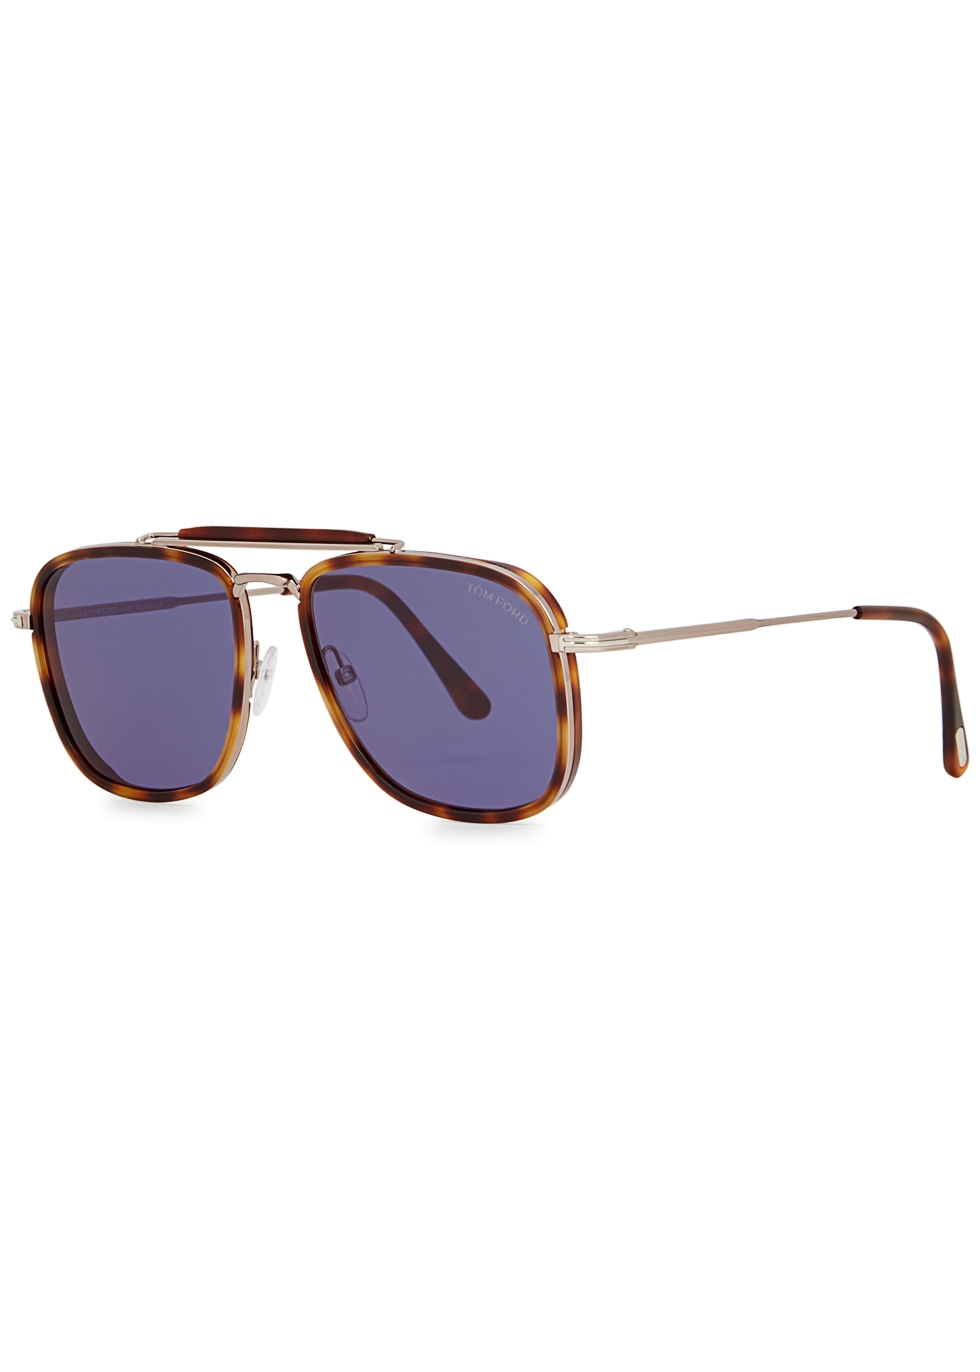 TOM FORD TRIPP 0666 52N Dark Havana/ Green Sunglasses Sonnenbrille Size 58  £205.00 - PicClick UK